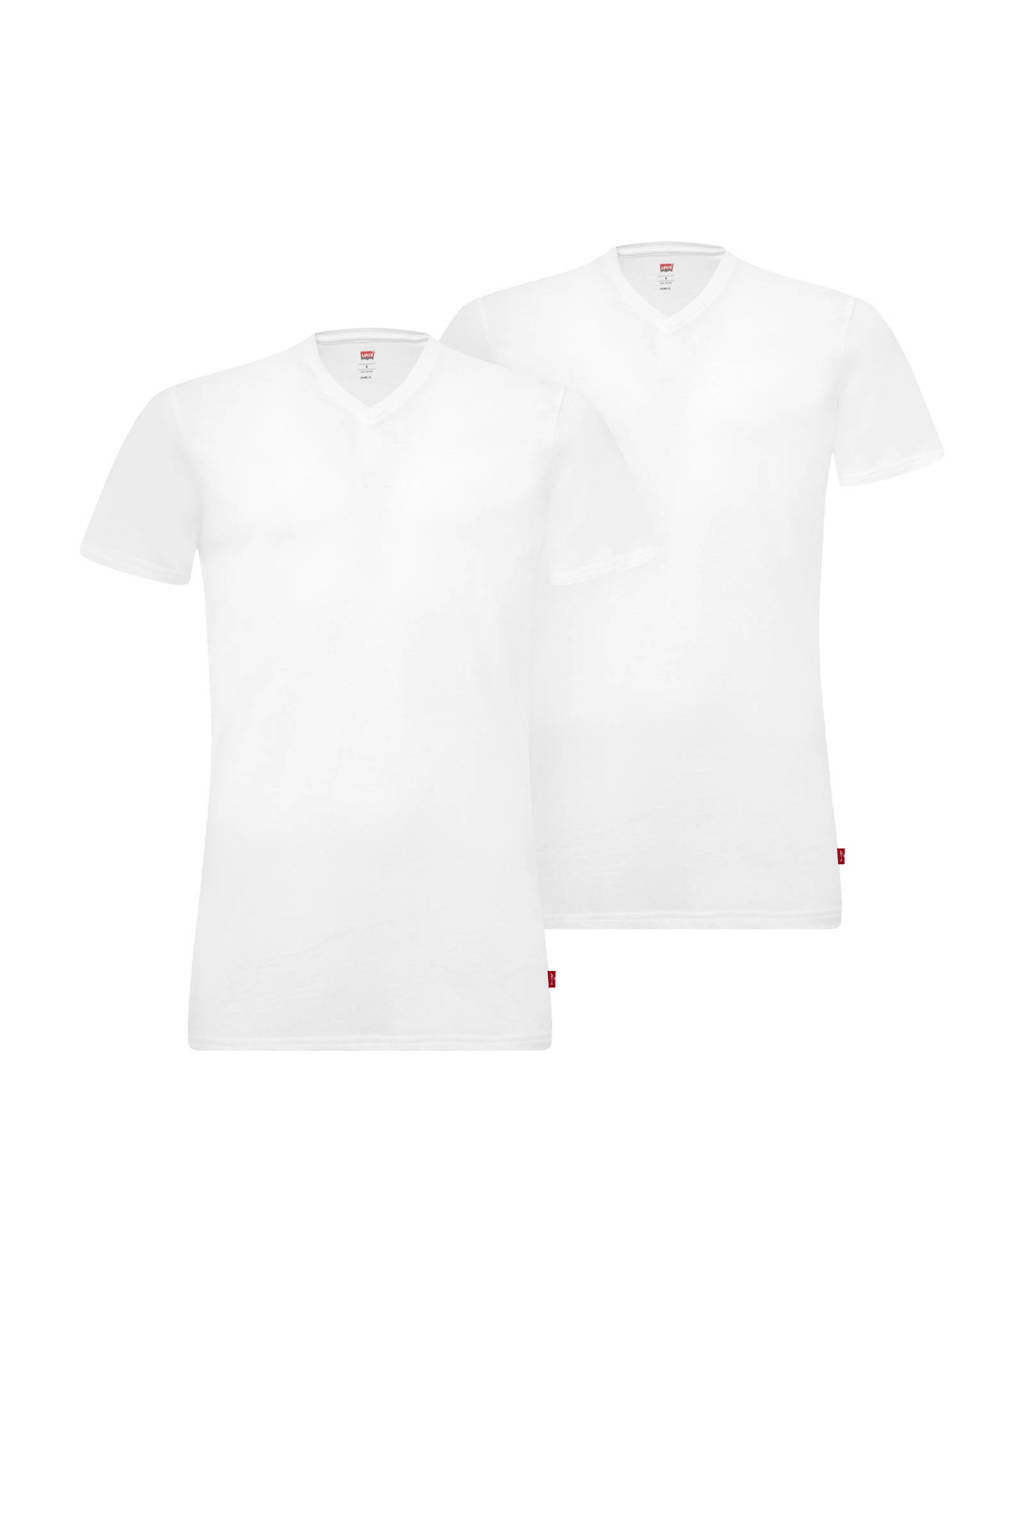 Levi's ondershirt (set van 2) wit